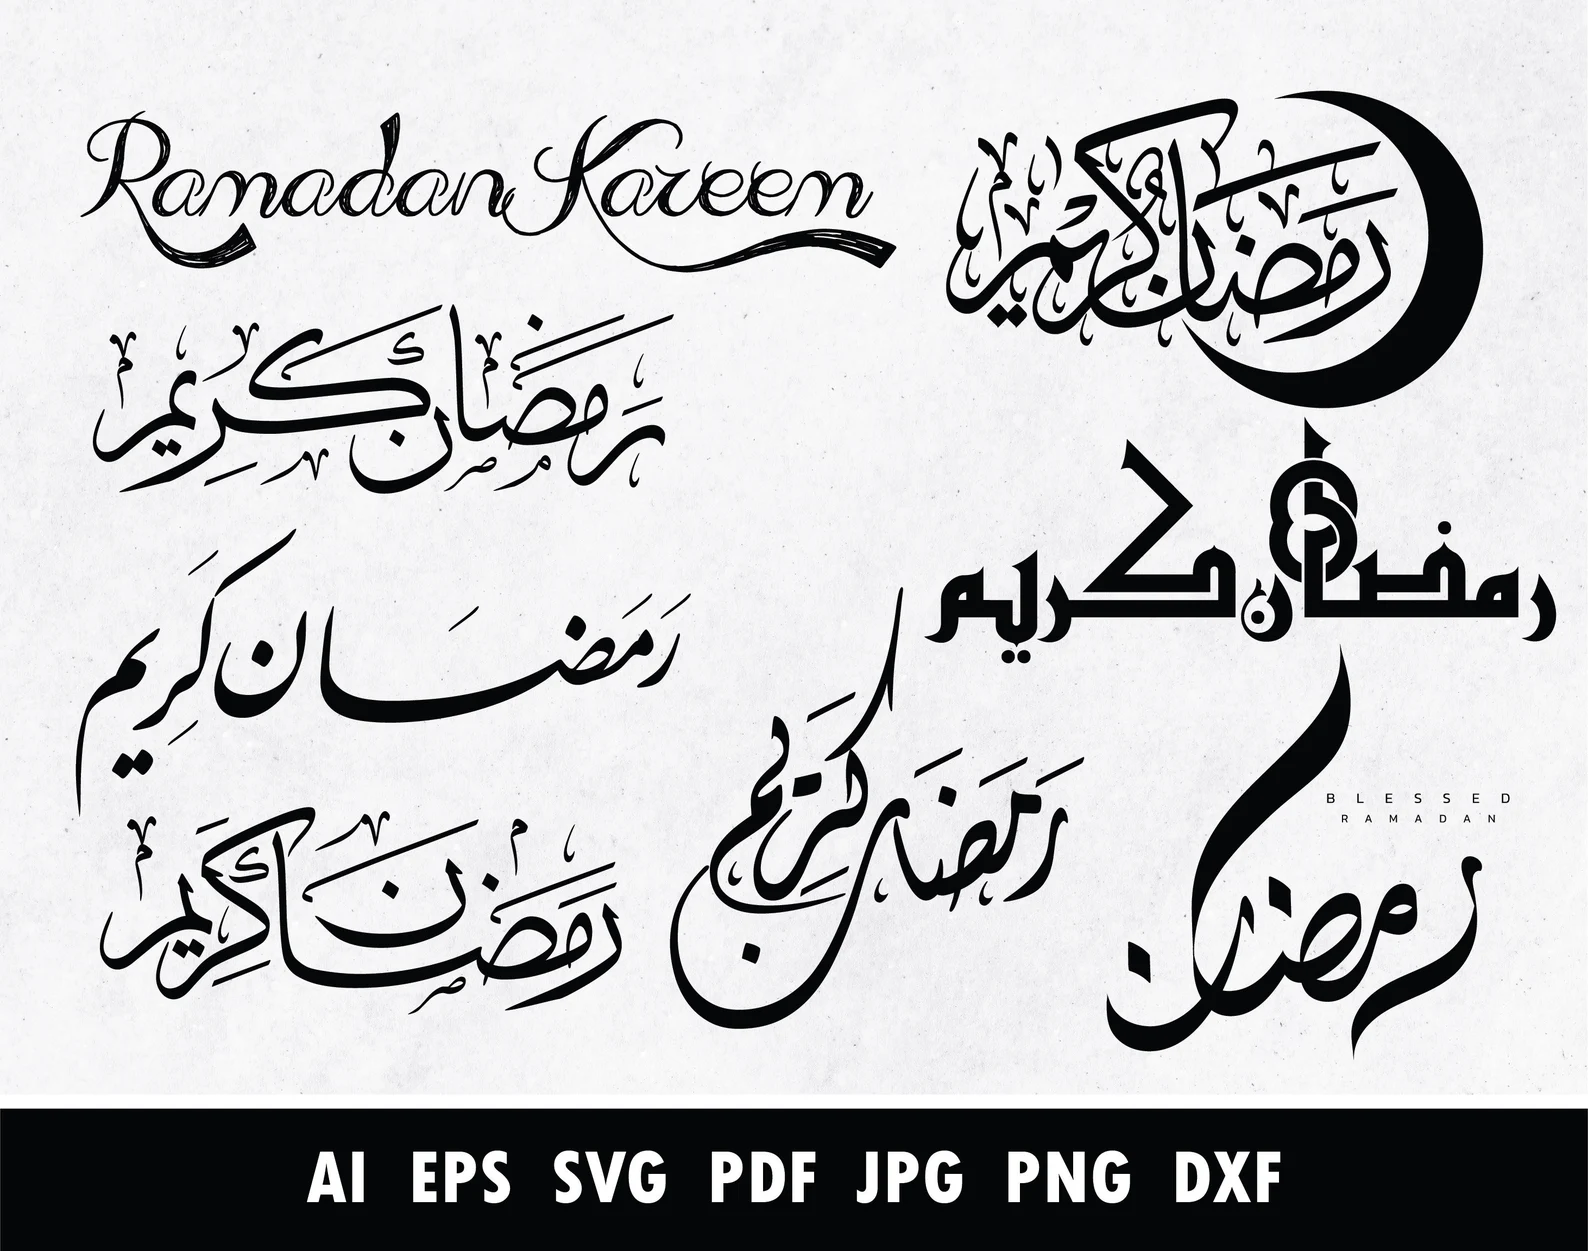 Some arabic letterings.